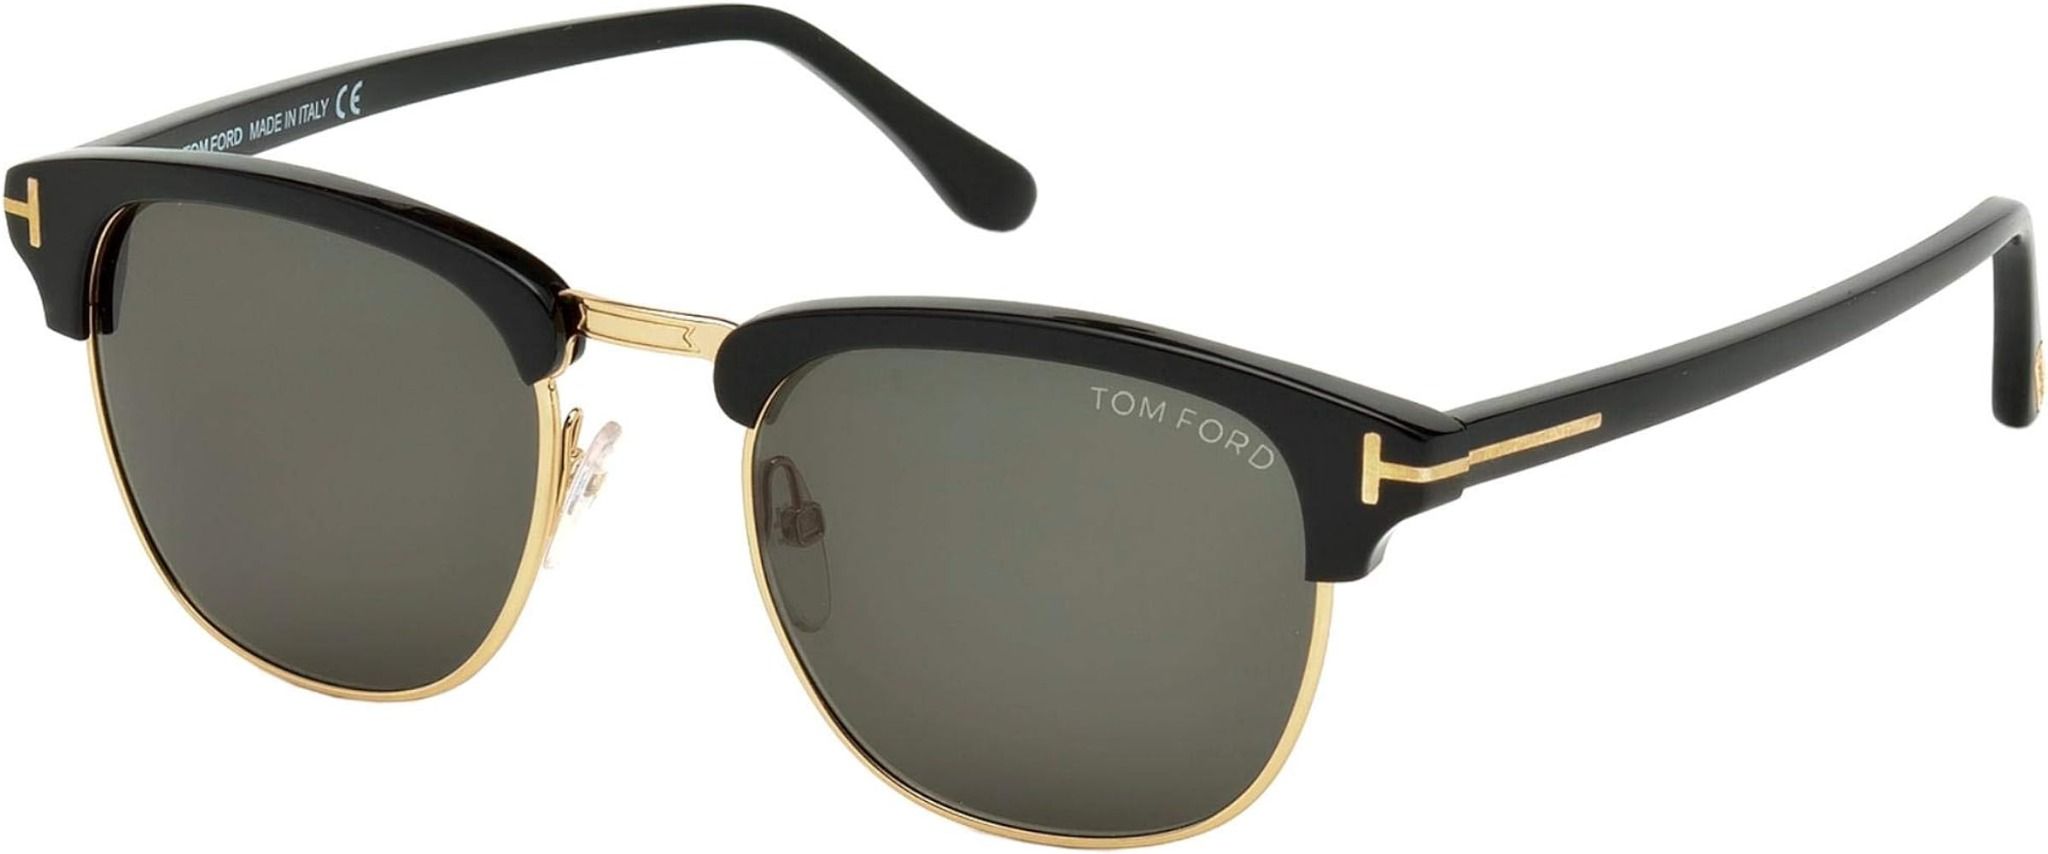  Tom Ford Henry sunglasses (James Bond sunglasses) 